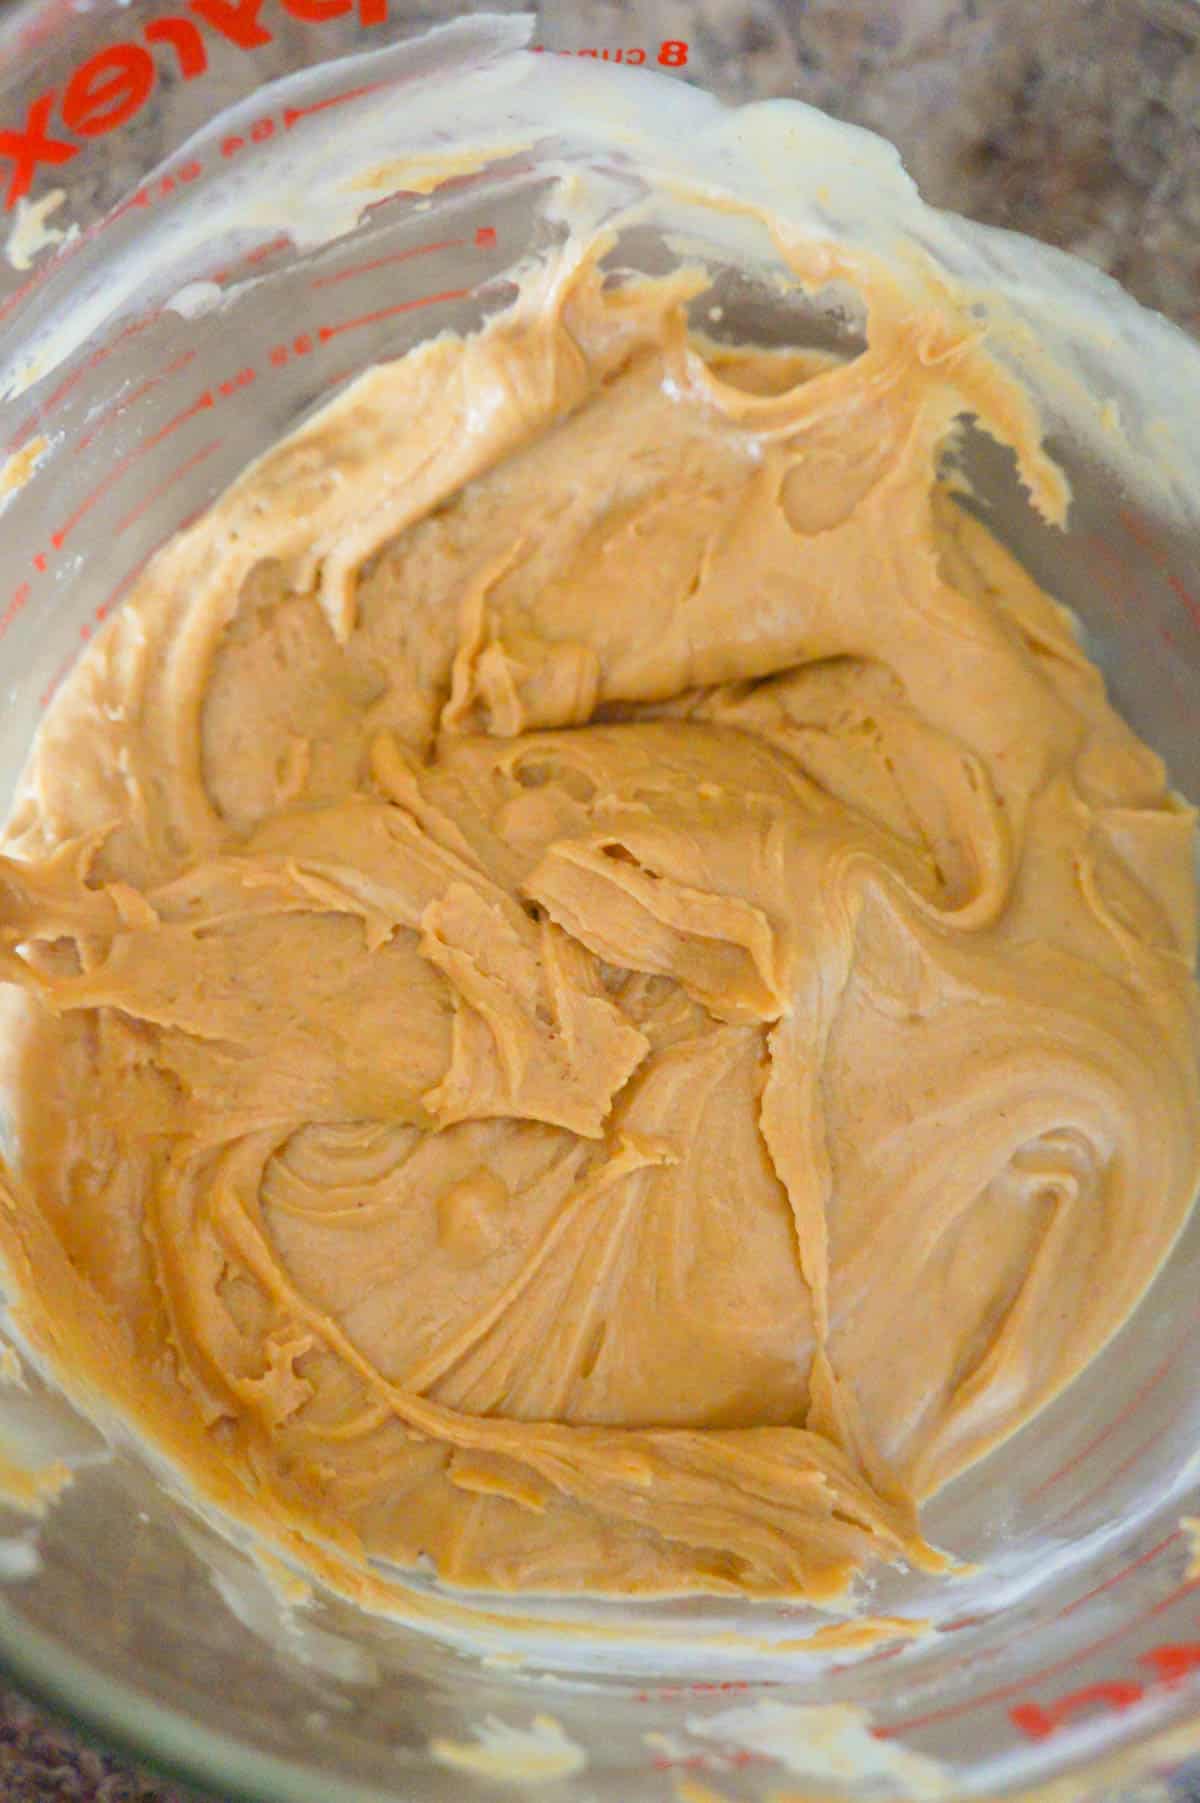 peanut butter fudge mixture in a glass bowl